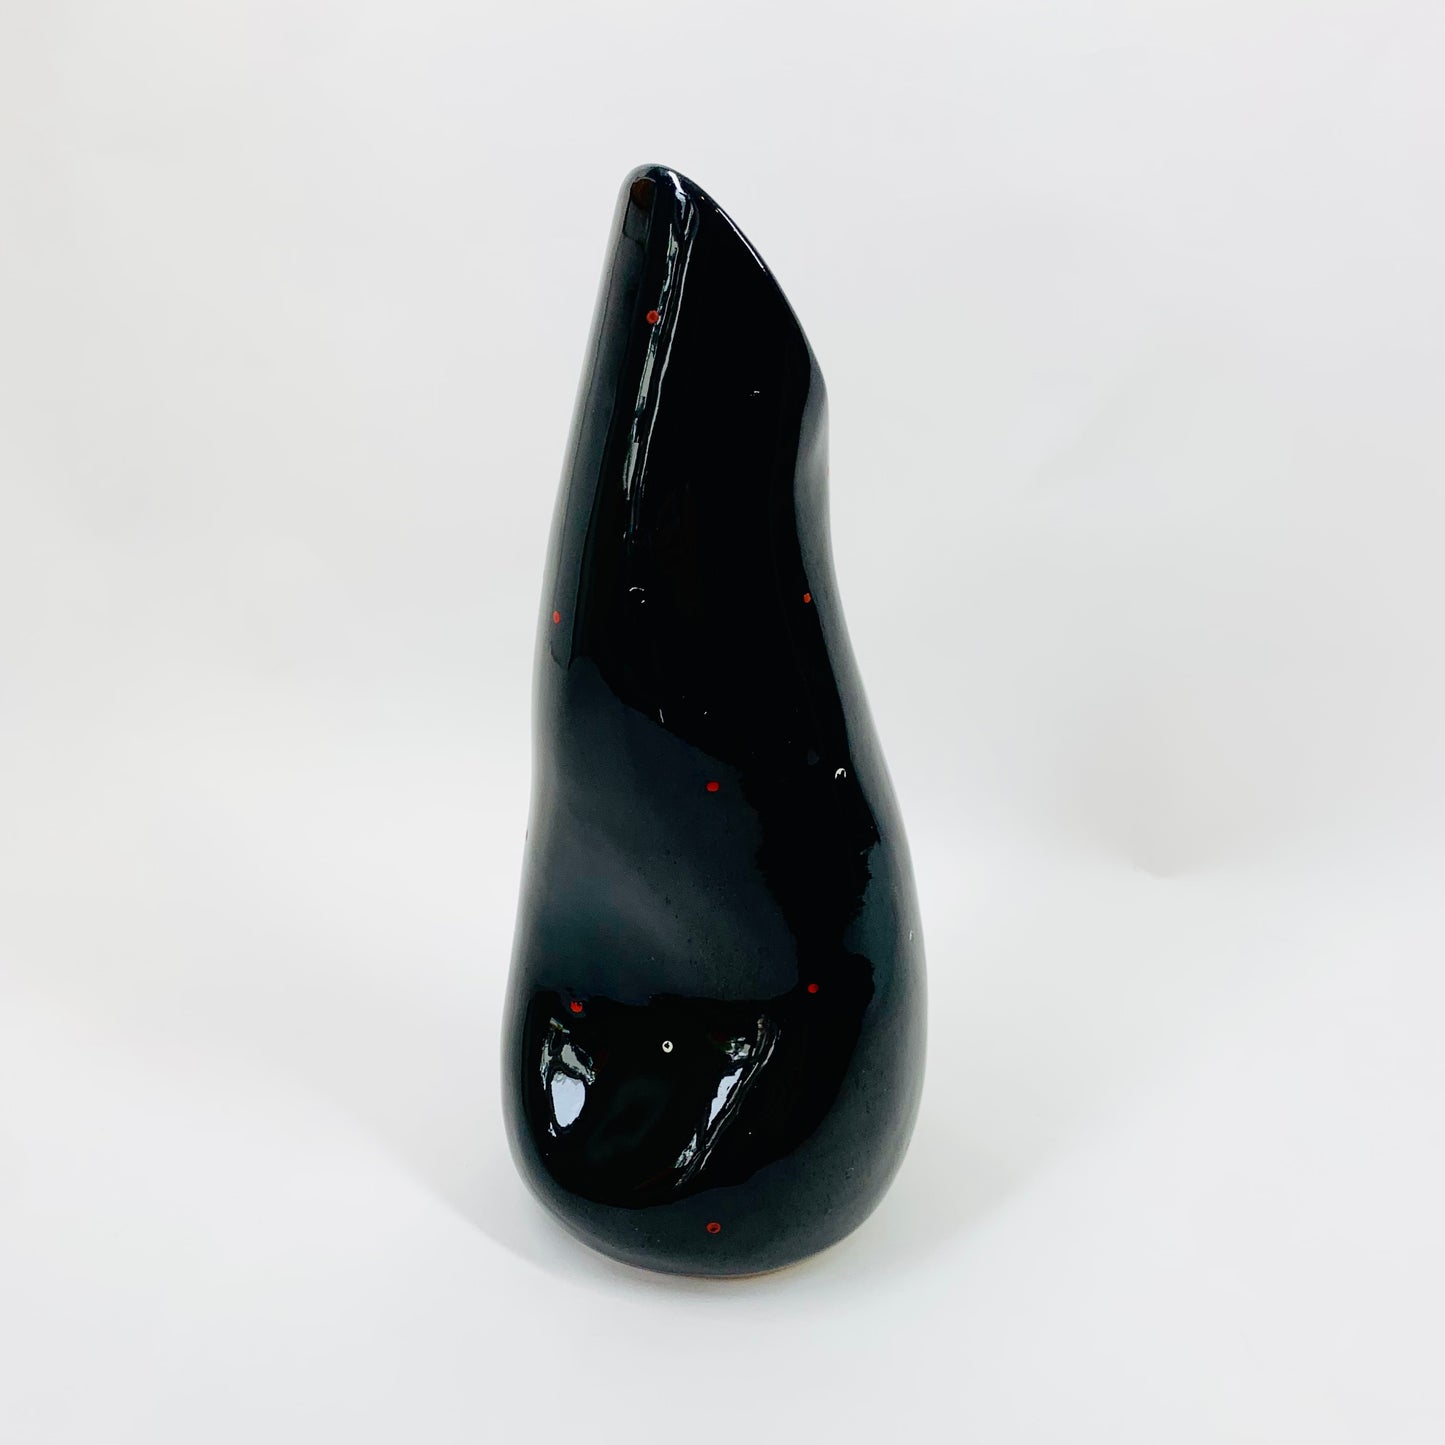 Midcentury hand painted black porcelain vase